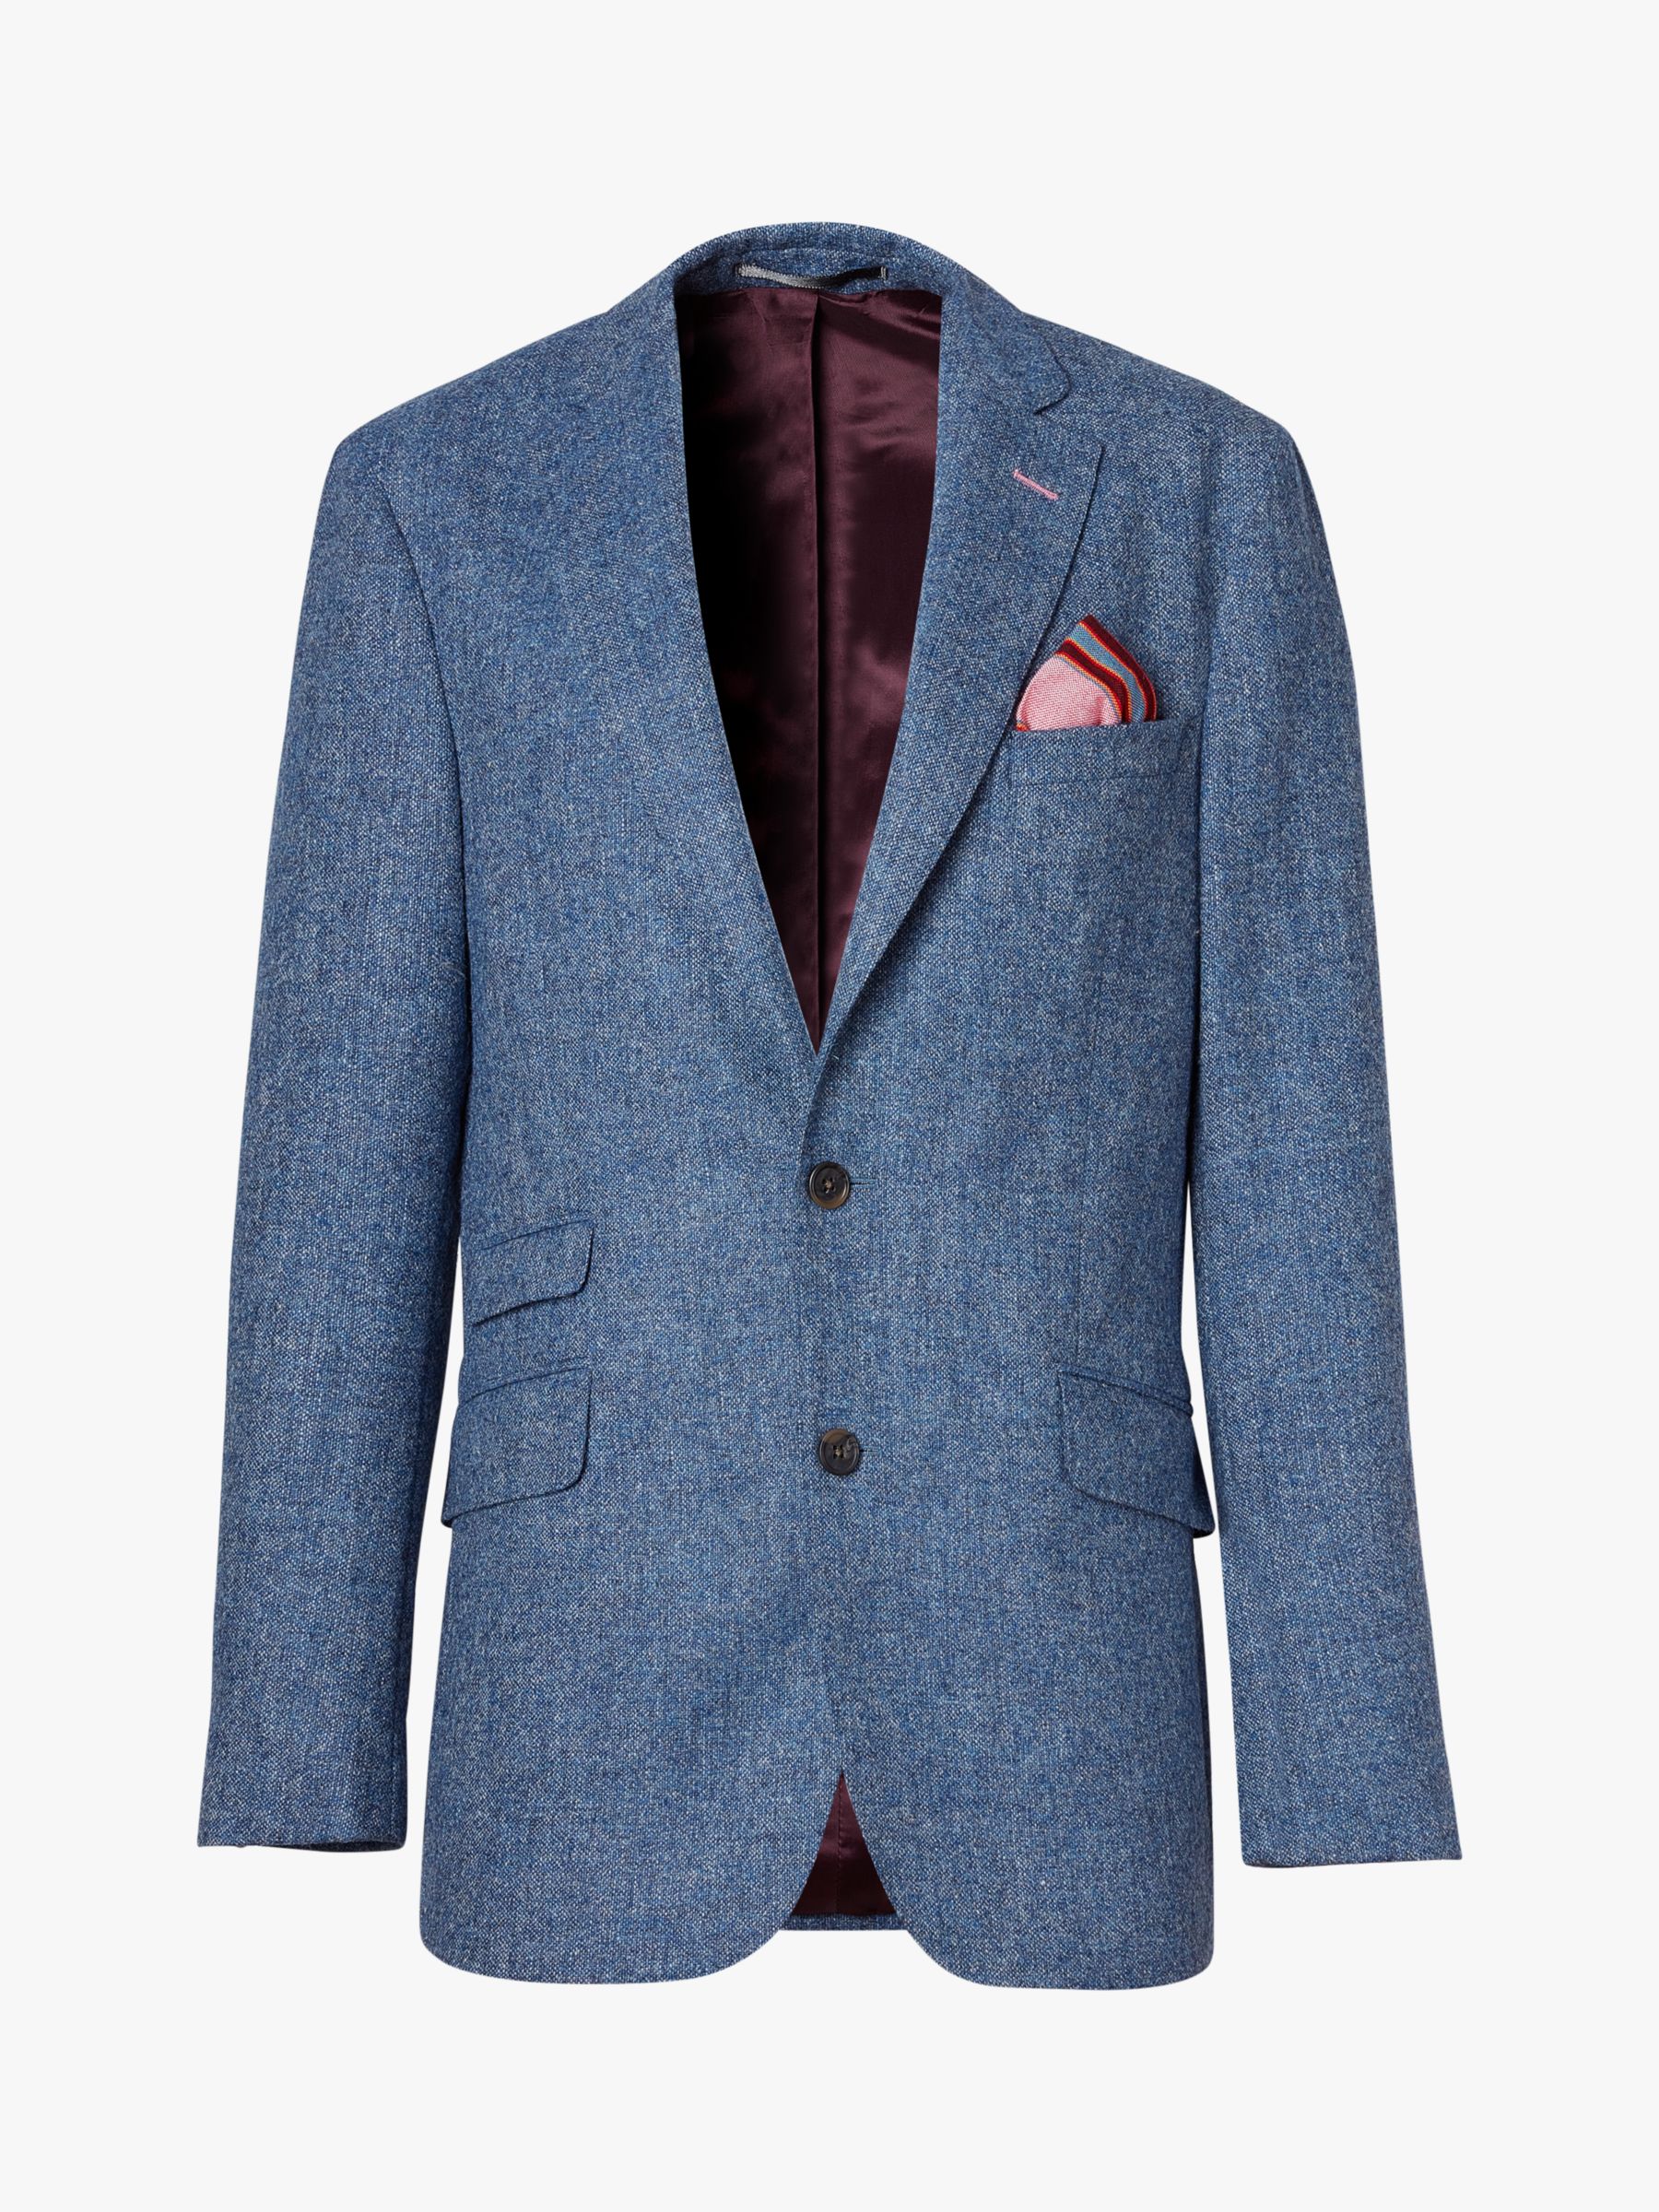 Buy KOY Tailored Fit Wool Blazer, Light Blue Online at johnlewis.com